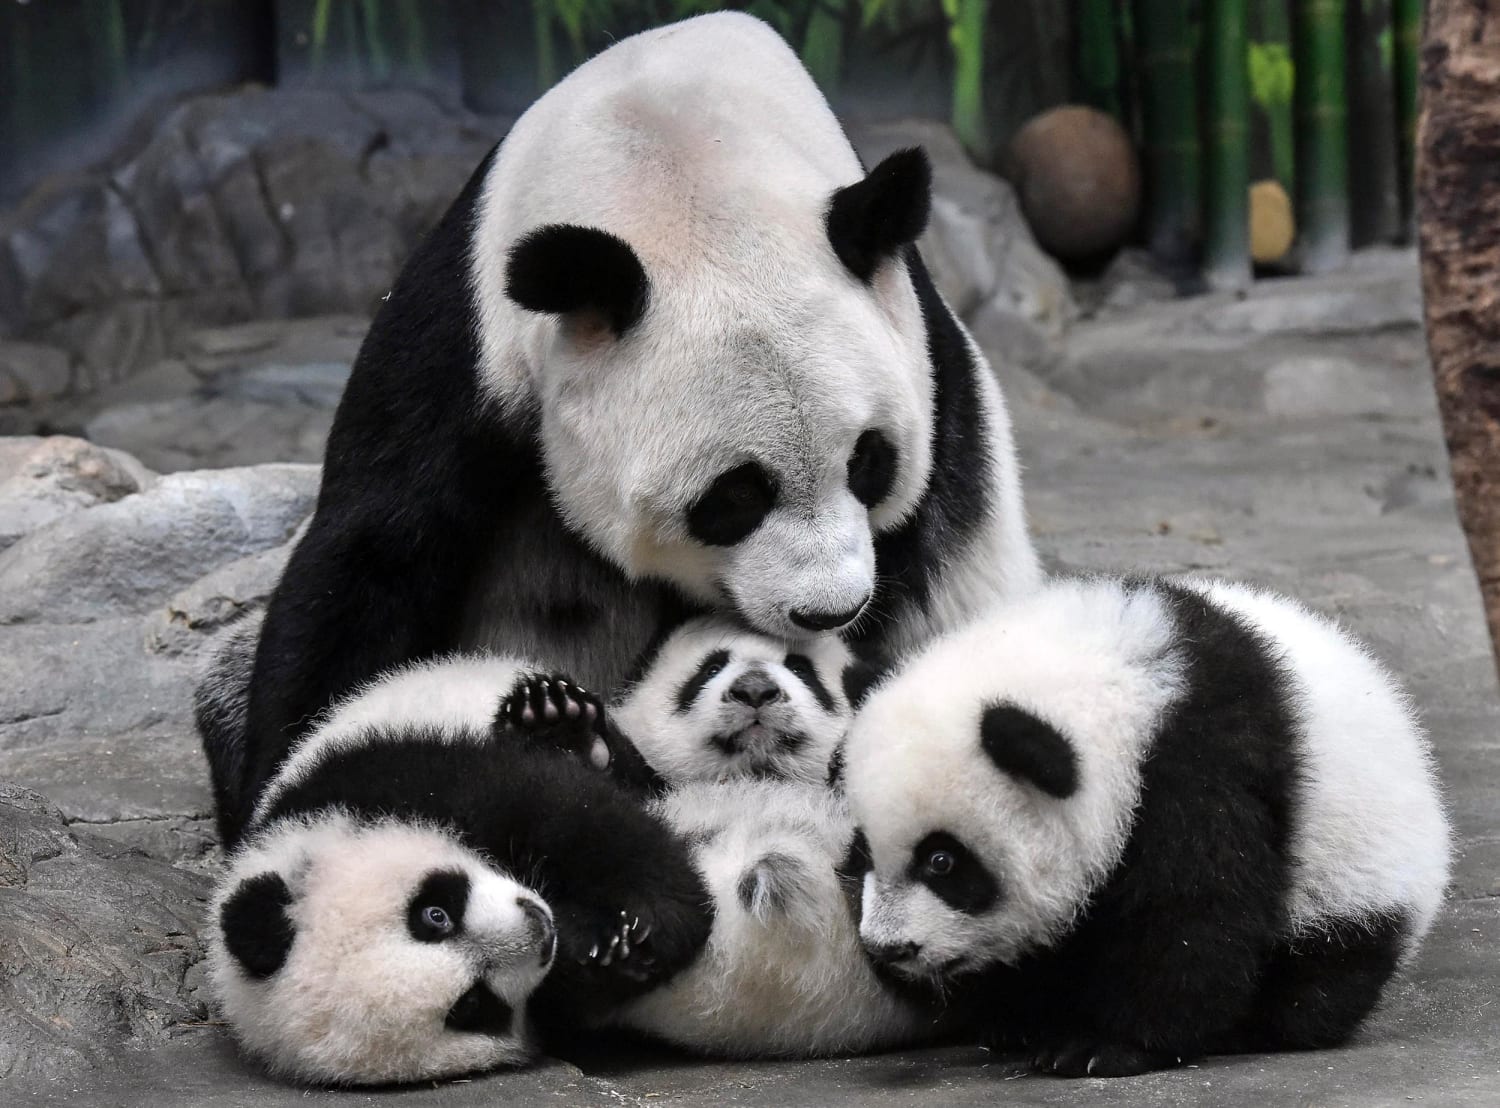 Gassy panda